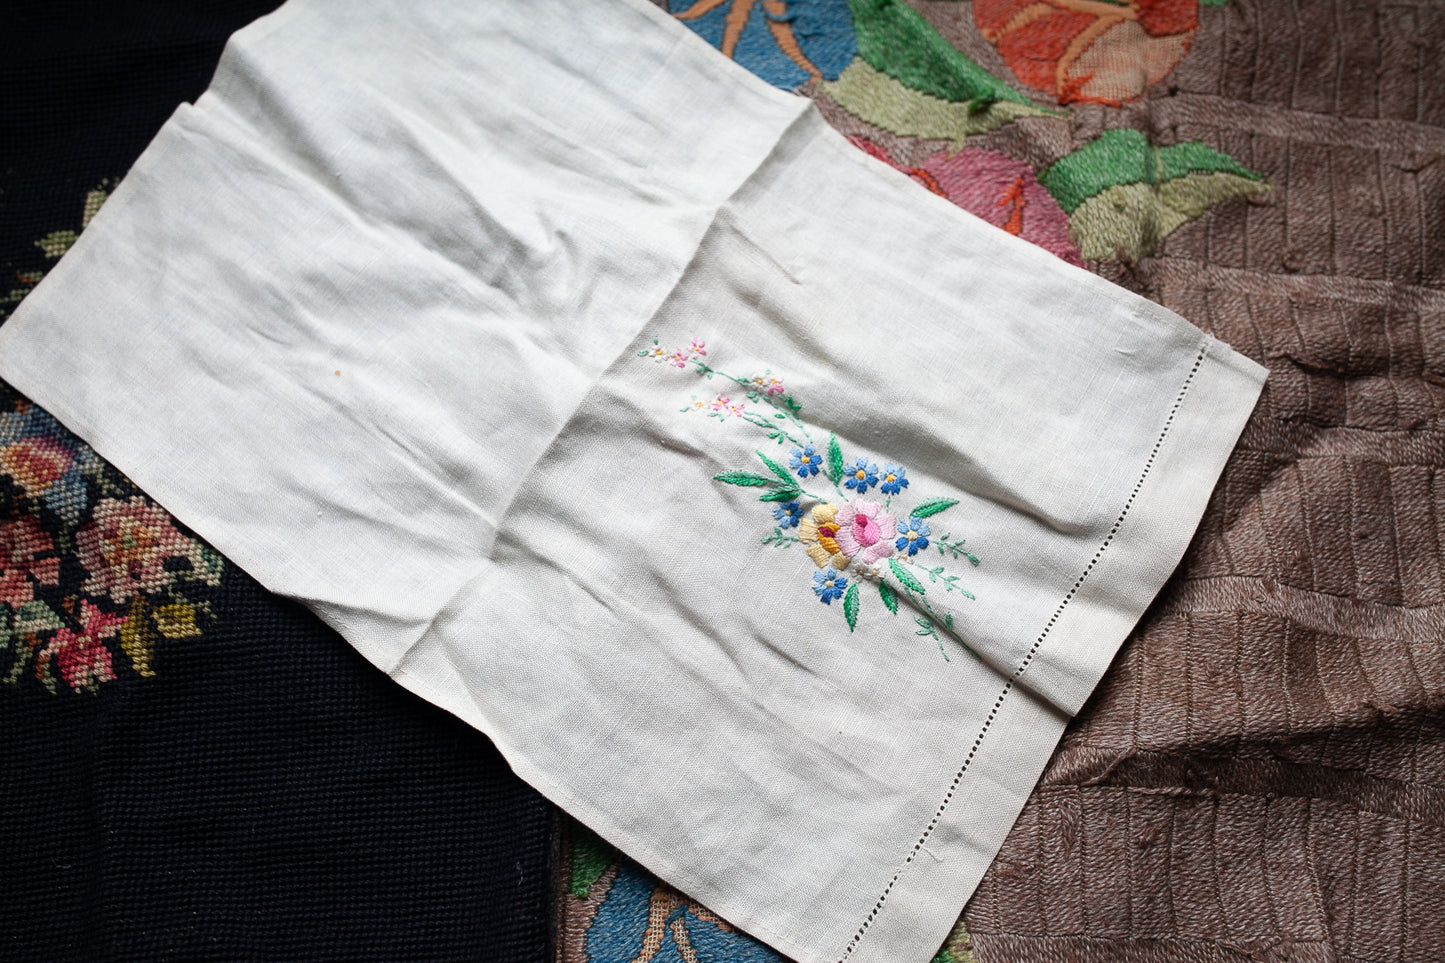 Vintage Florals - Floral Fabric Pieces - Needlepoint